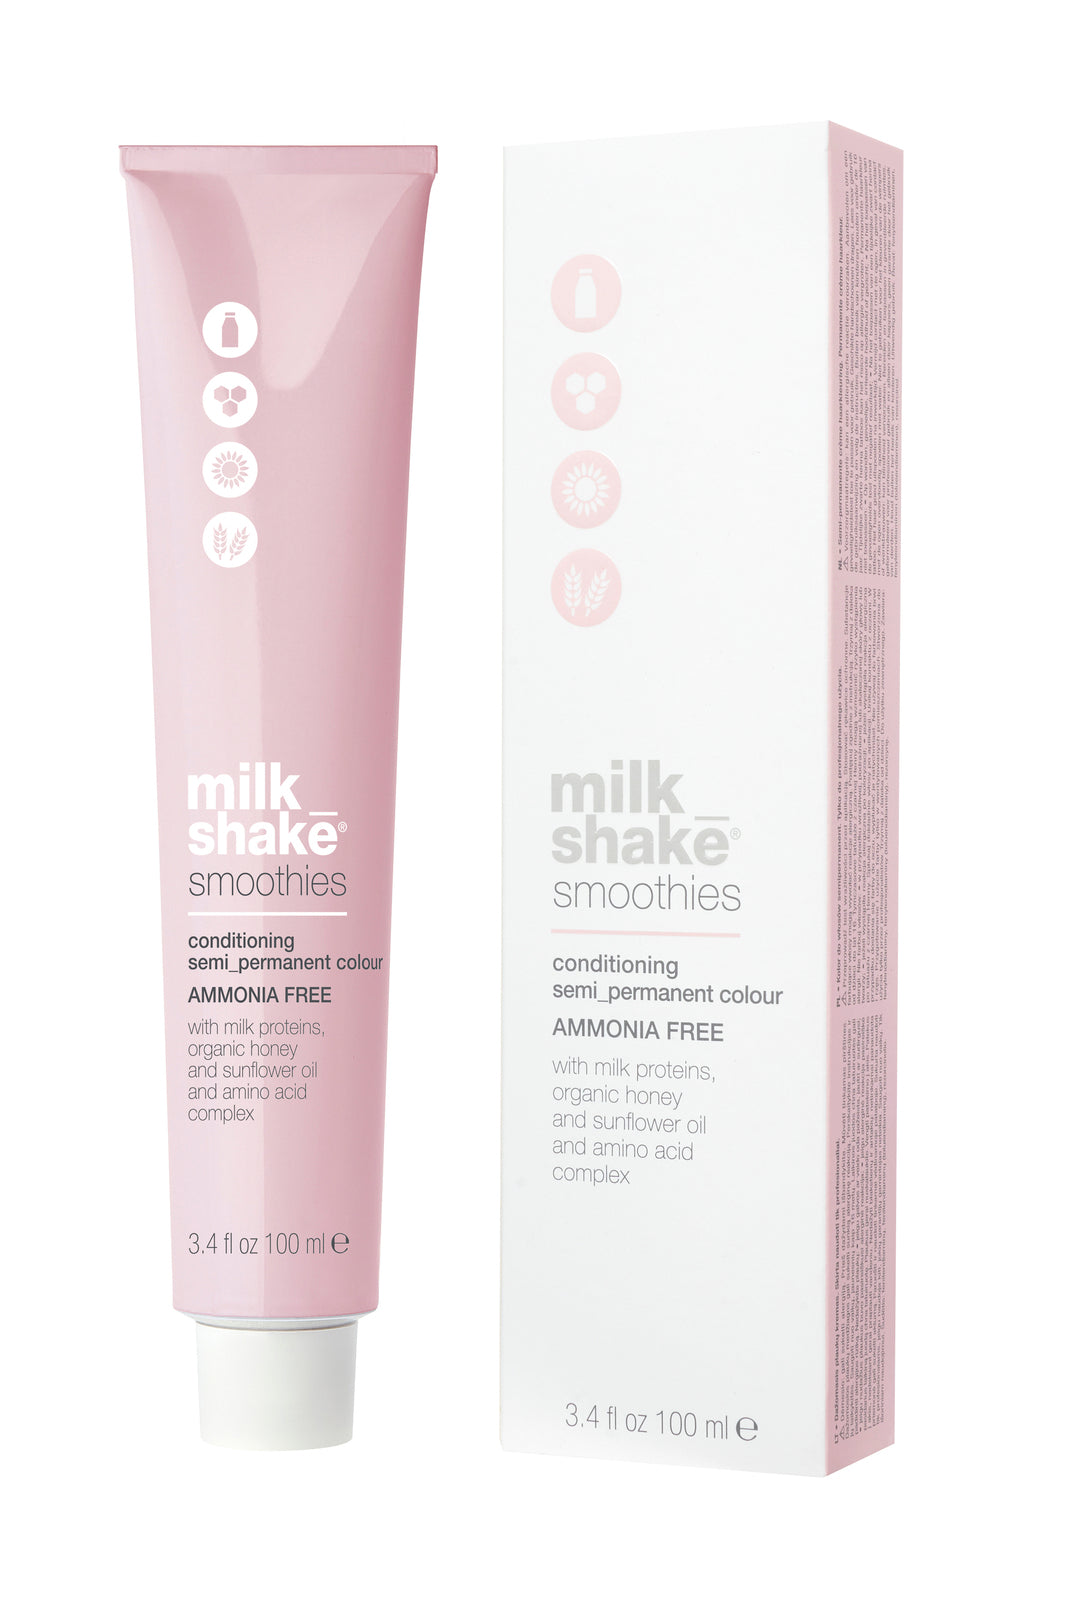 Milkshake smoothies semi-permanent color SILVER